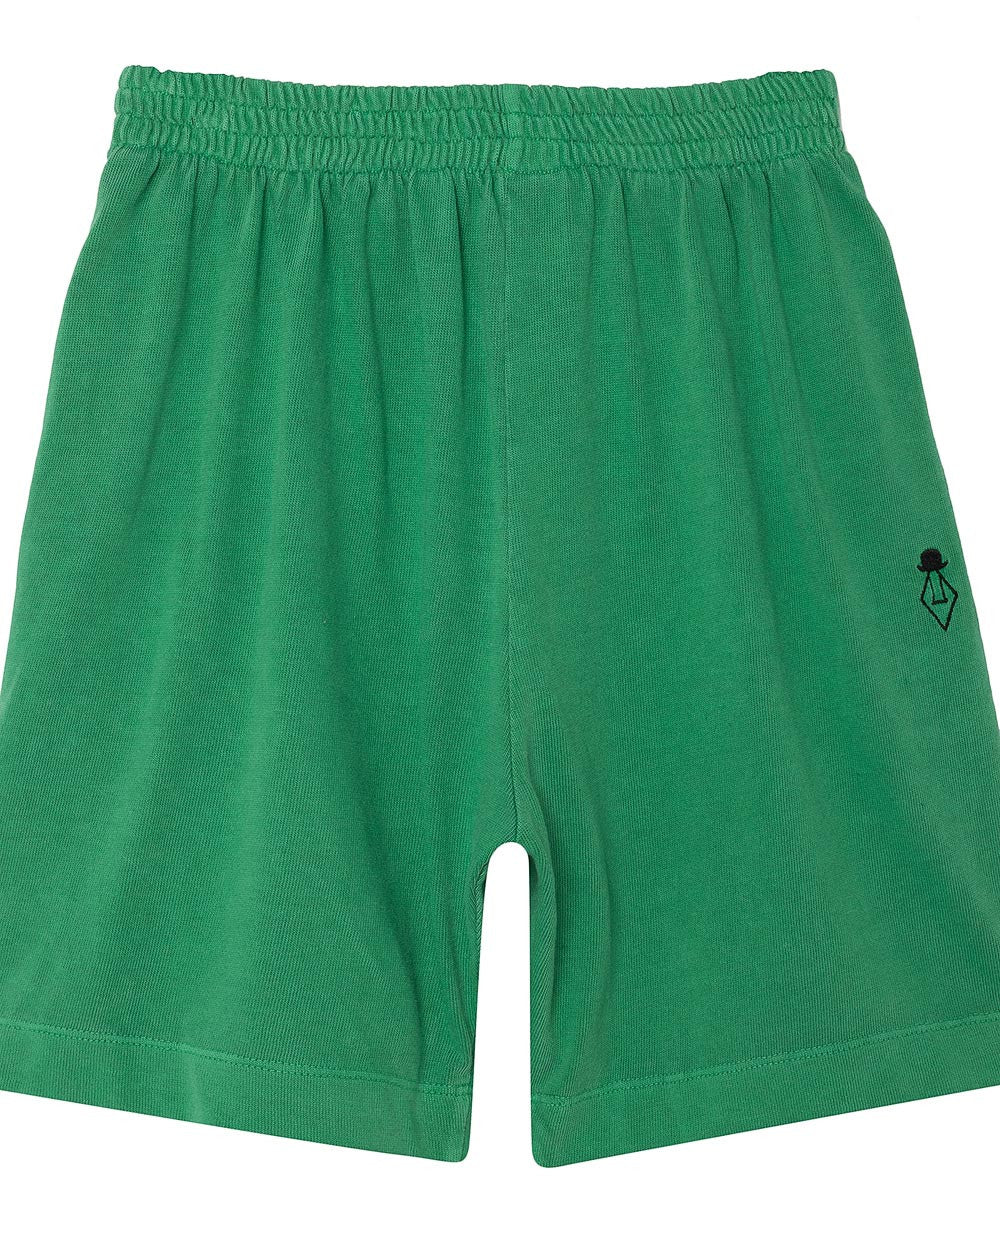 Boys Green Cotton Shorts With Black Logo - CÉMAROSE | Children's Fashion Store - 3